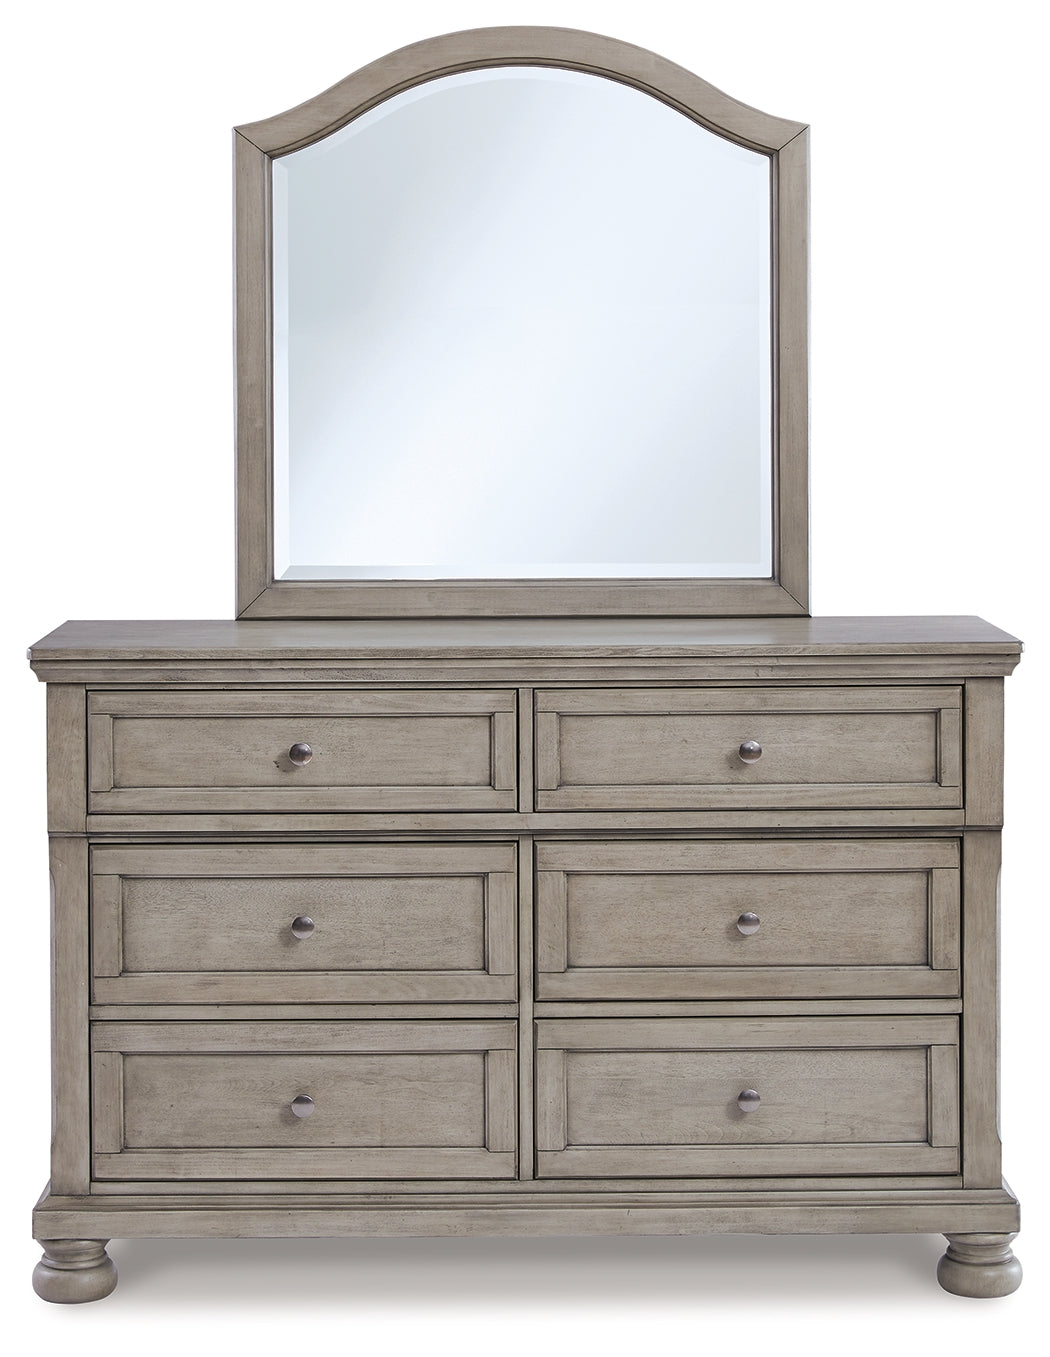 Lettner Dresser and Mirror